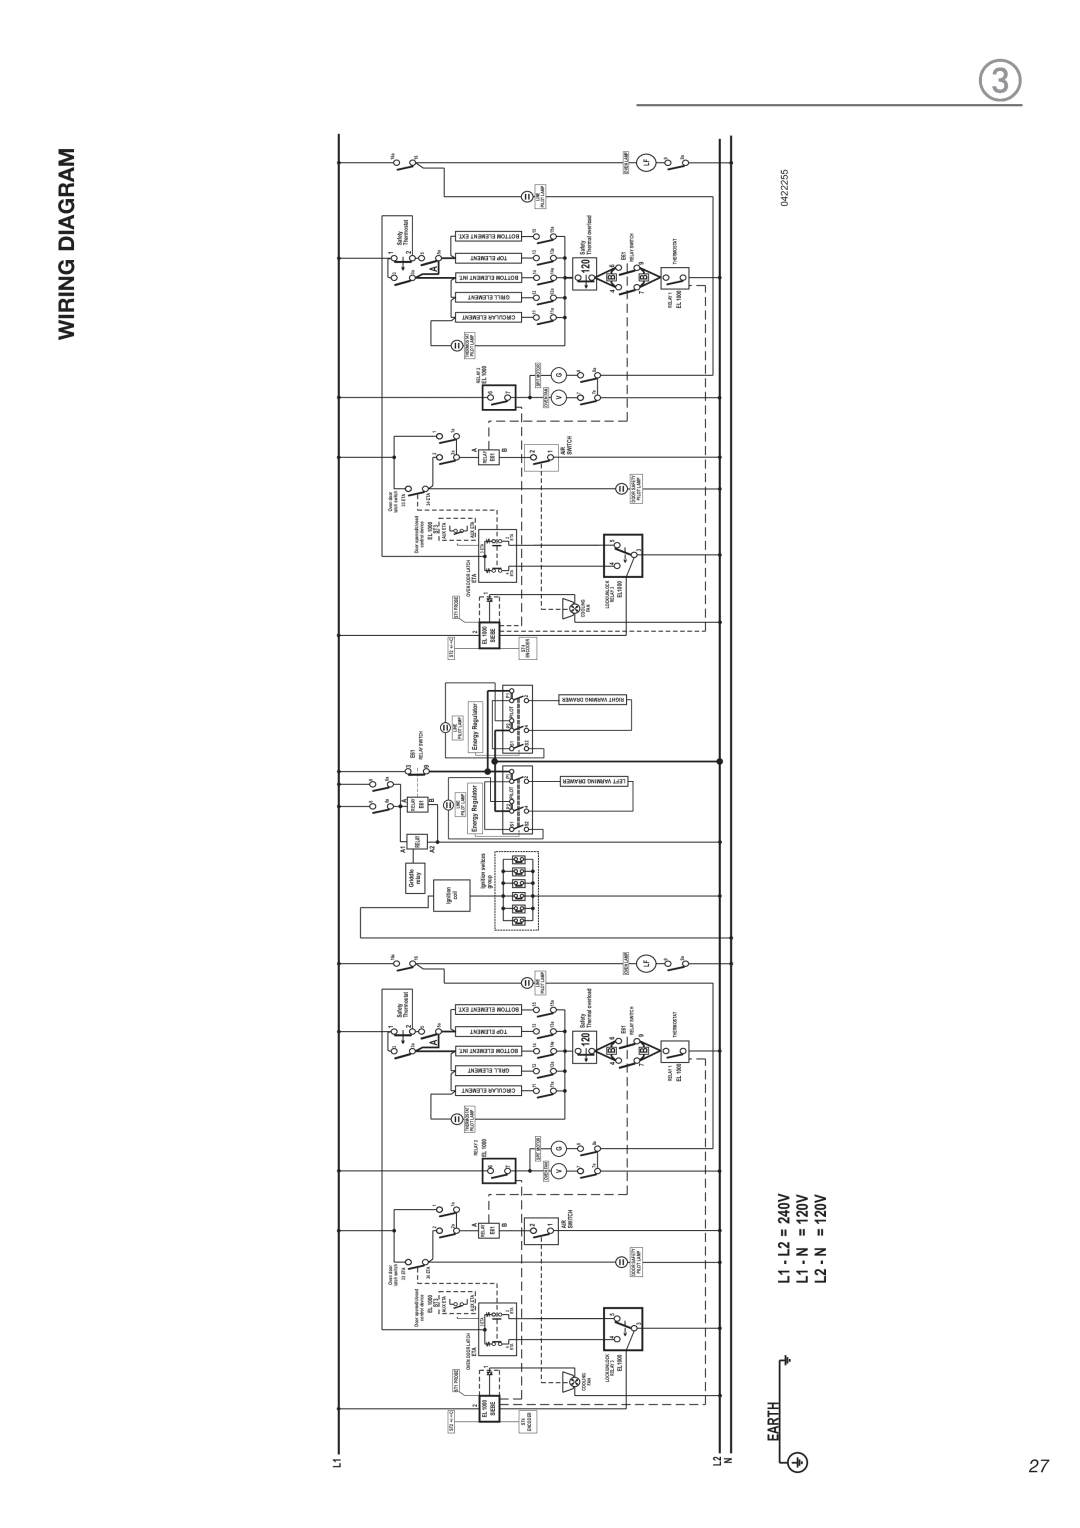 DeLonghi DL48P6G-E, DL 48 P6G warranty Wiring Diagram, L1 - L2 =, L1 - N, L2 - N, Earth, 0422255 